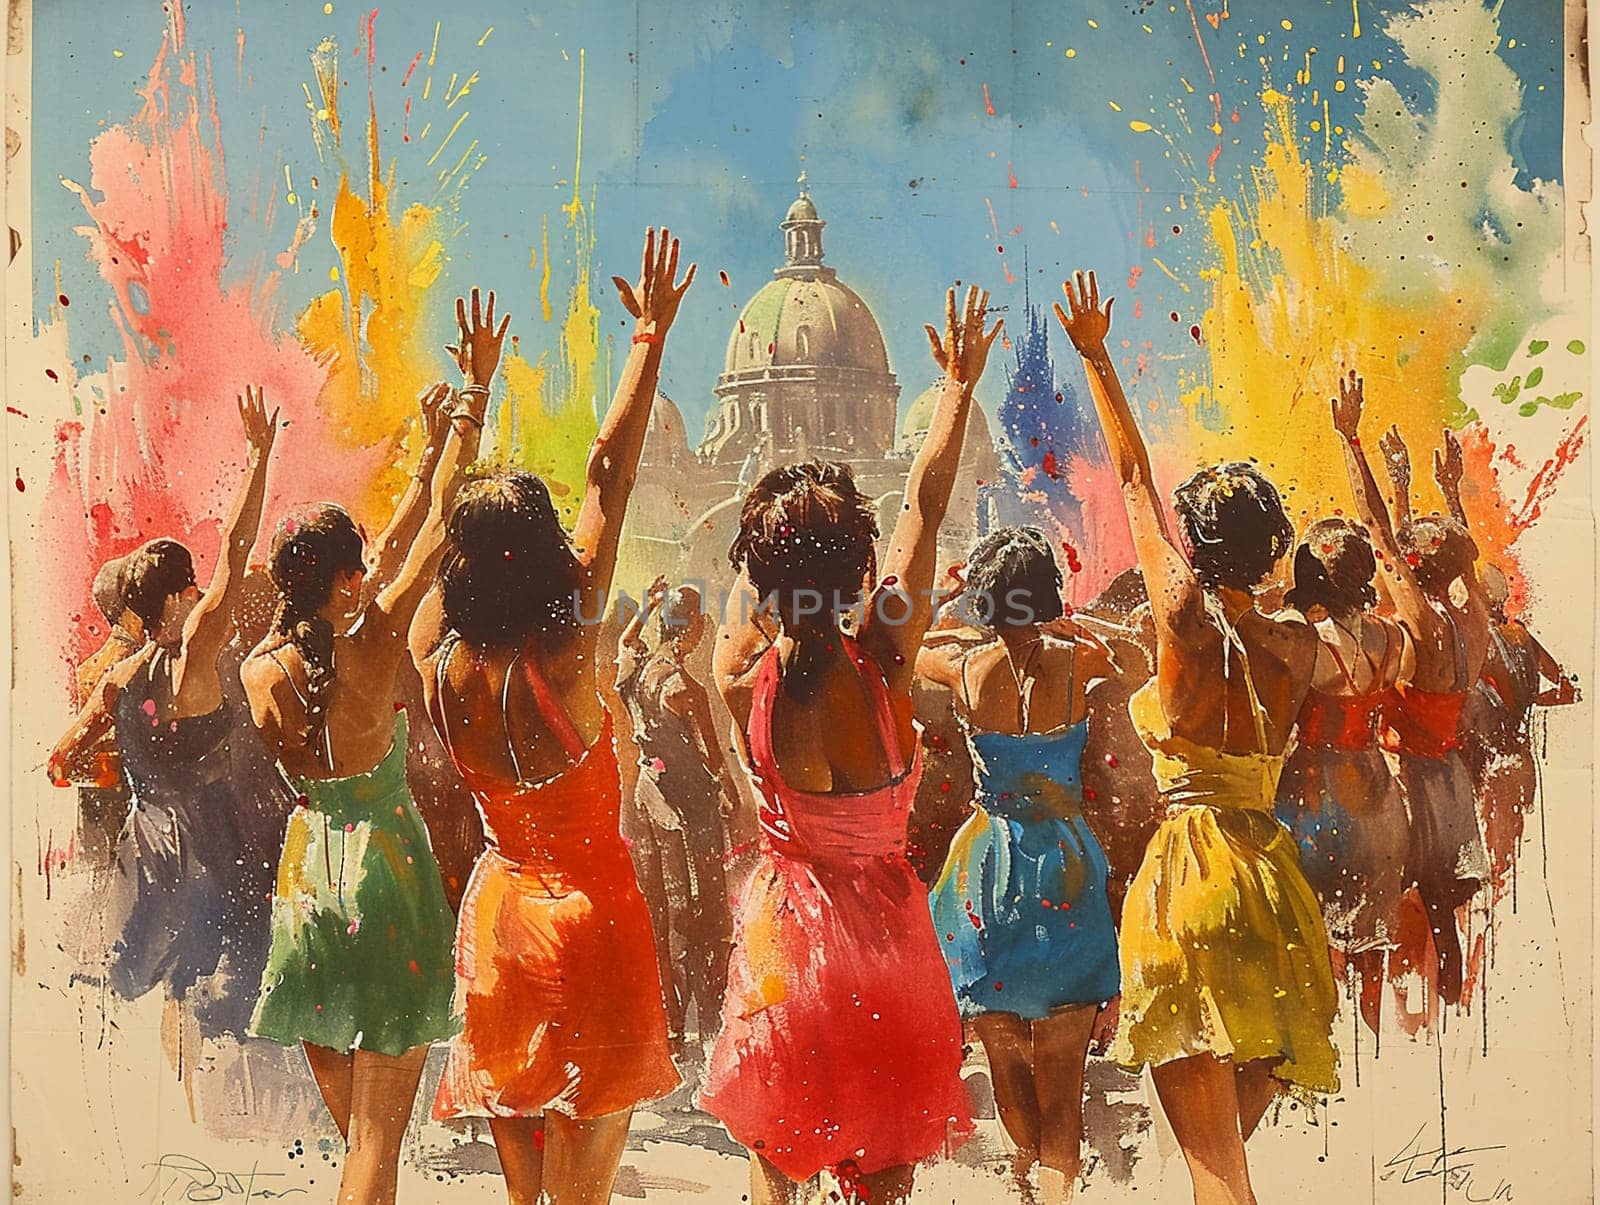 Vintage travel poster promoting festival celebrating Holi, with vibrant splashes of color.